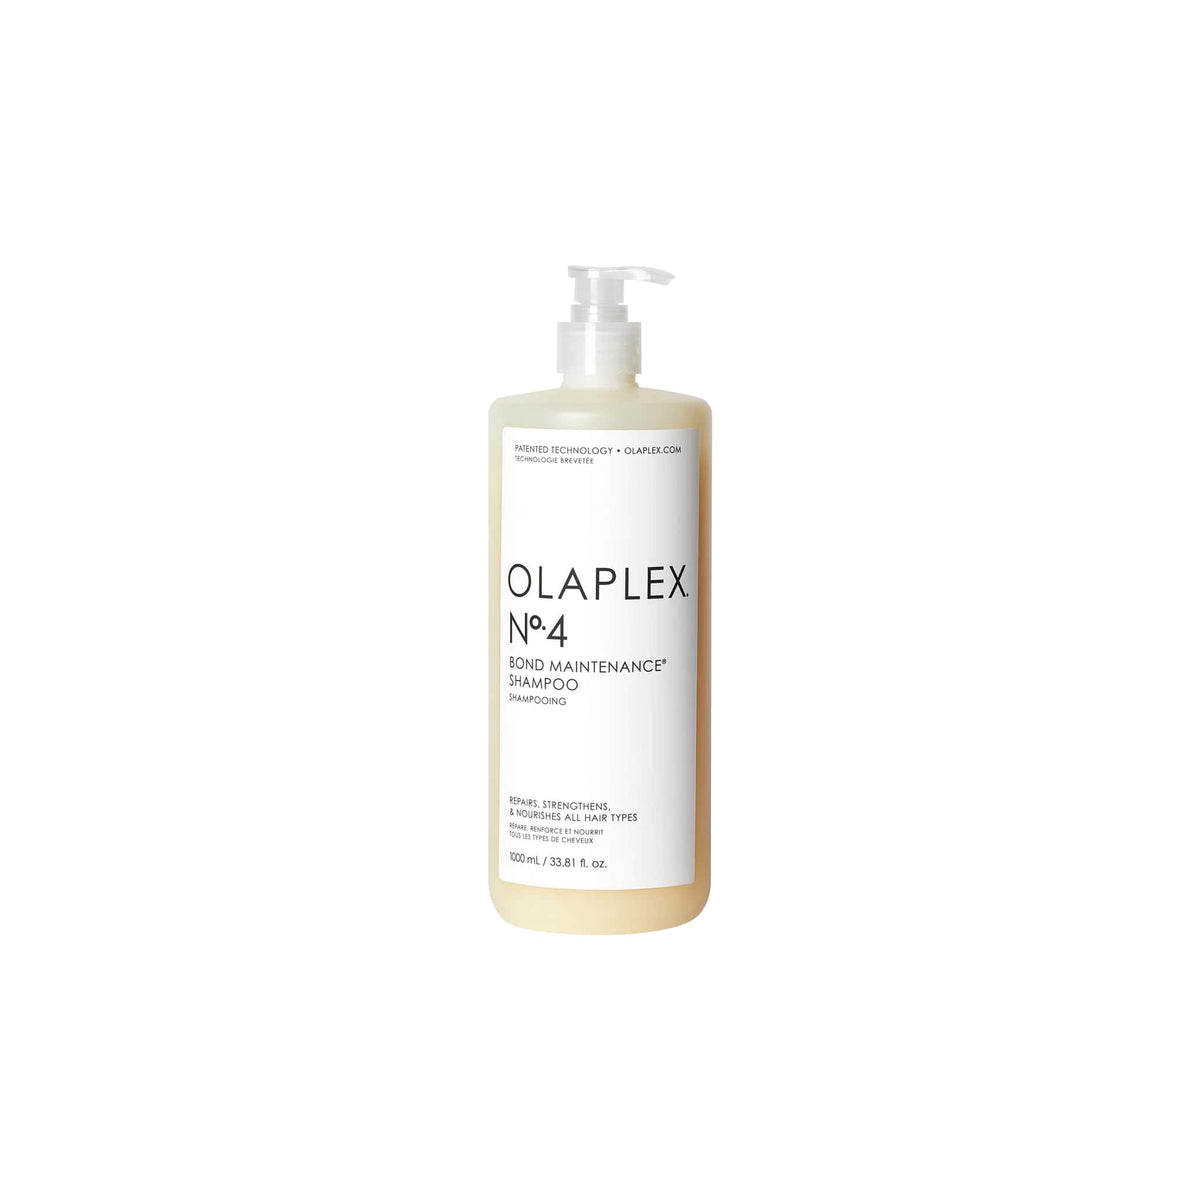 Olaplex No.4 Shampoo - Shop Online | Retail Box